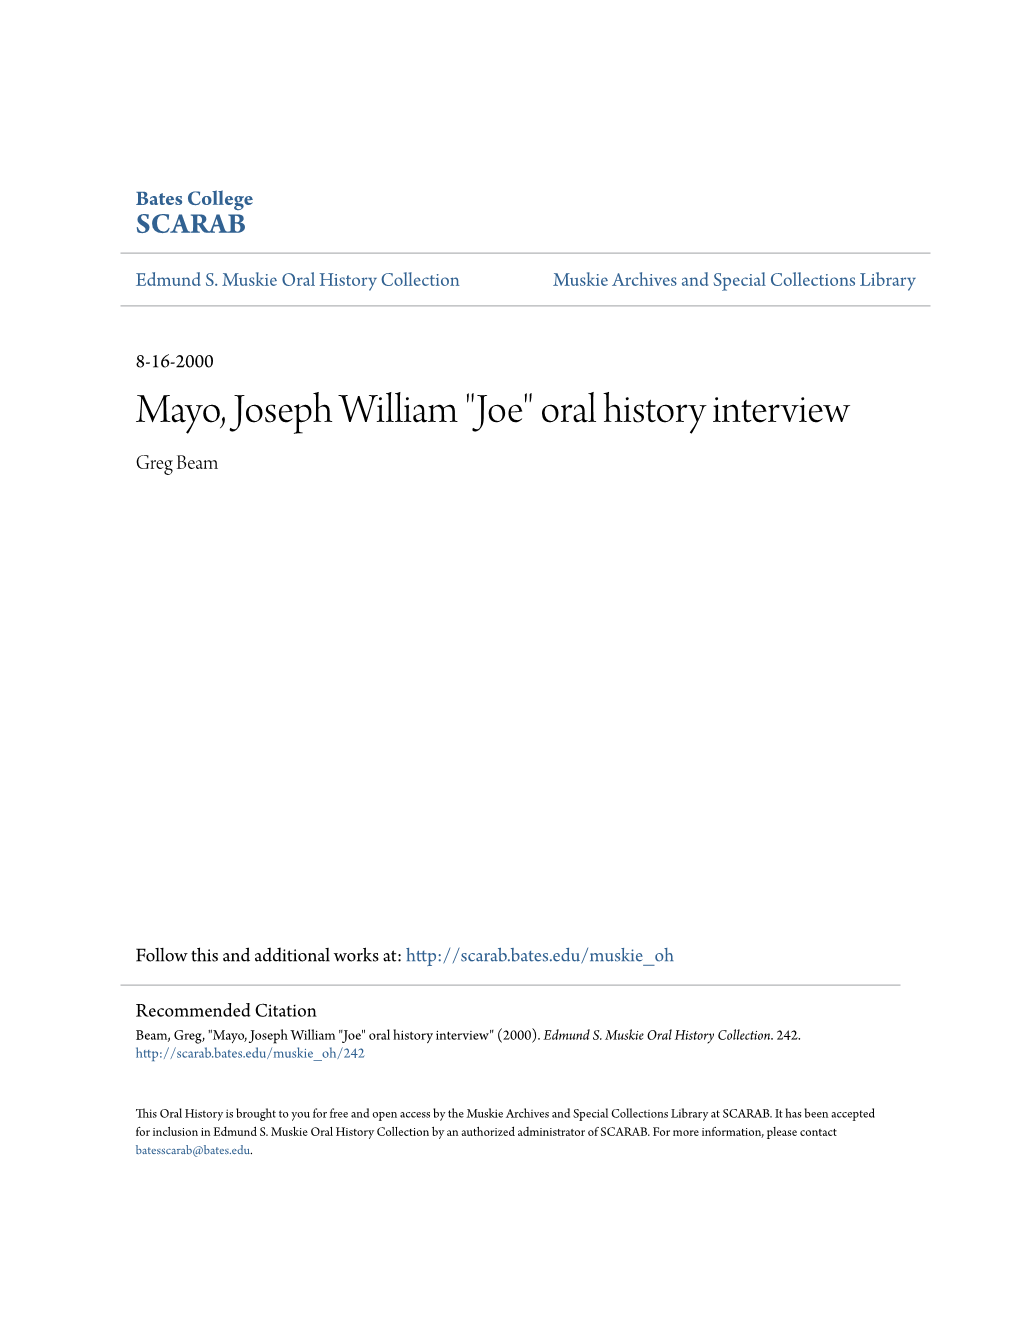 Mayo, Joseph William "Joe" Oral History Interview Greg Beam